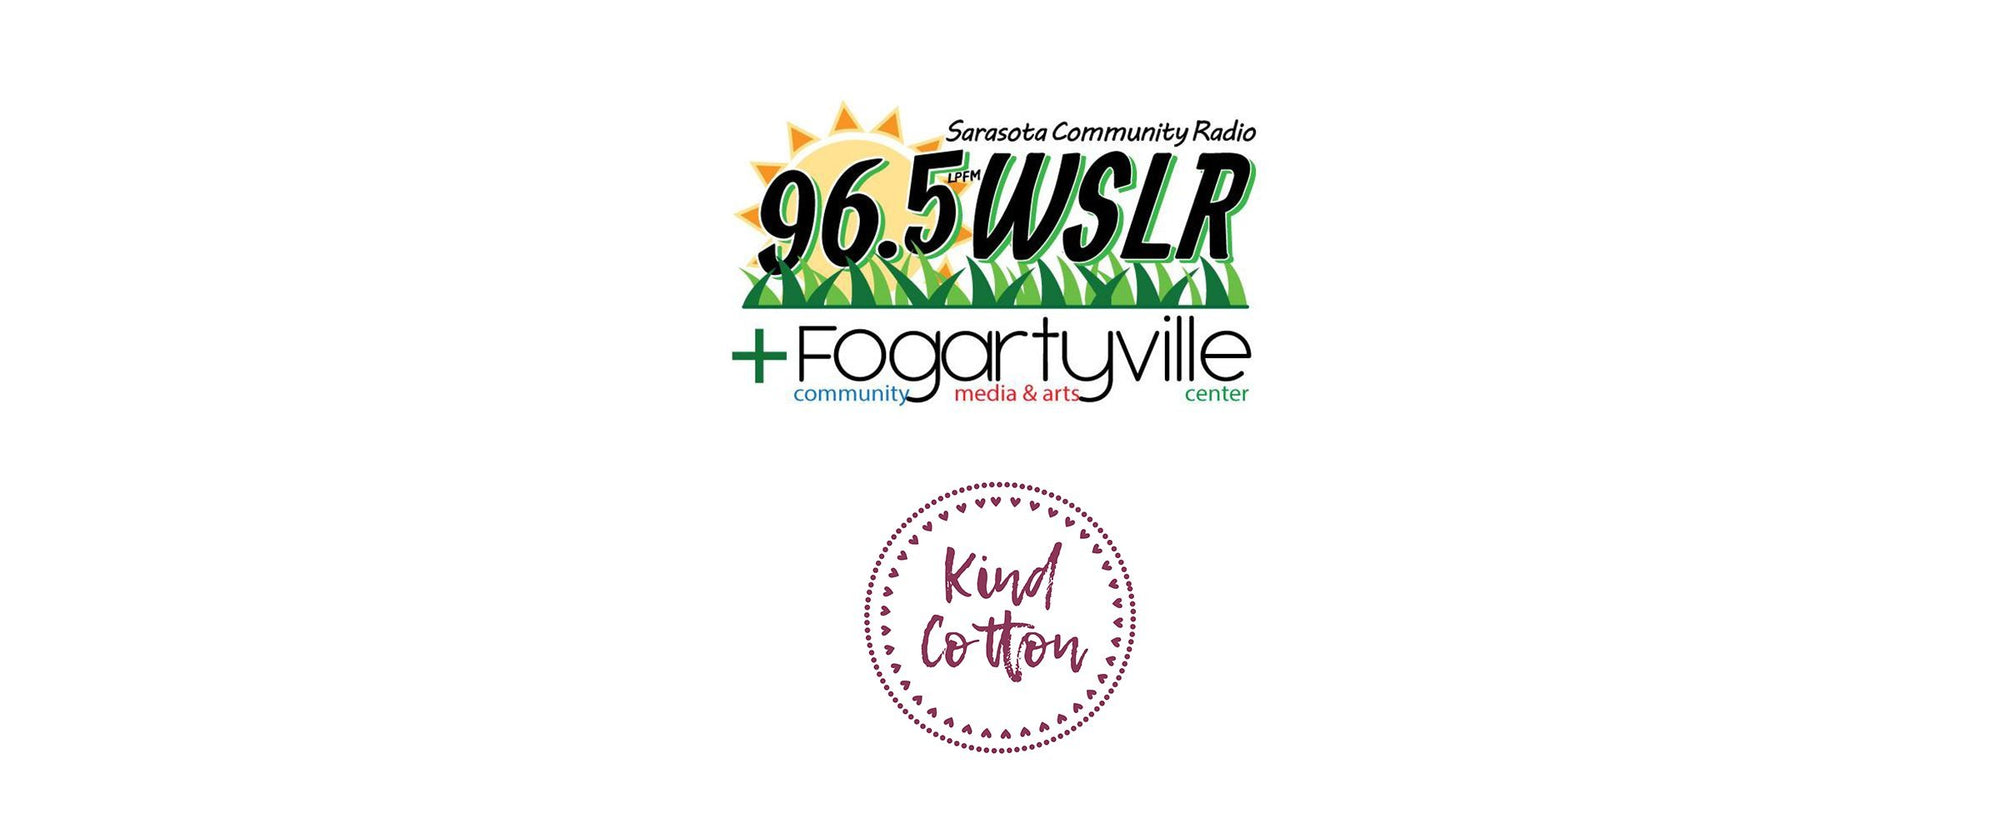 WSLR 96.5 FM Sarasota Fogartyville Interview | Kind Cotton